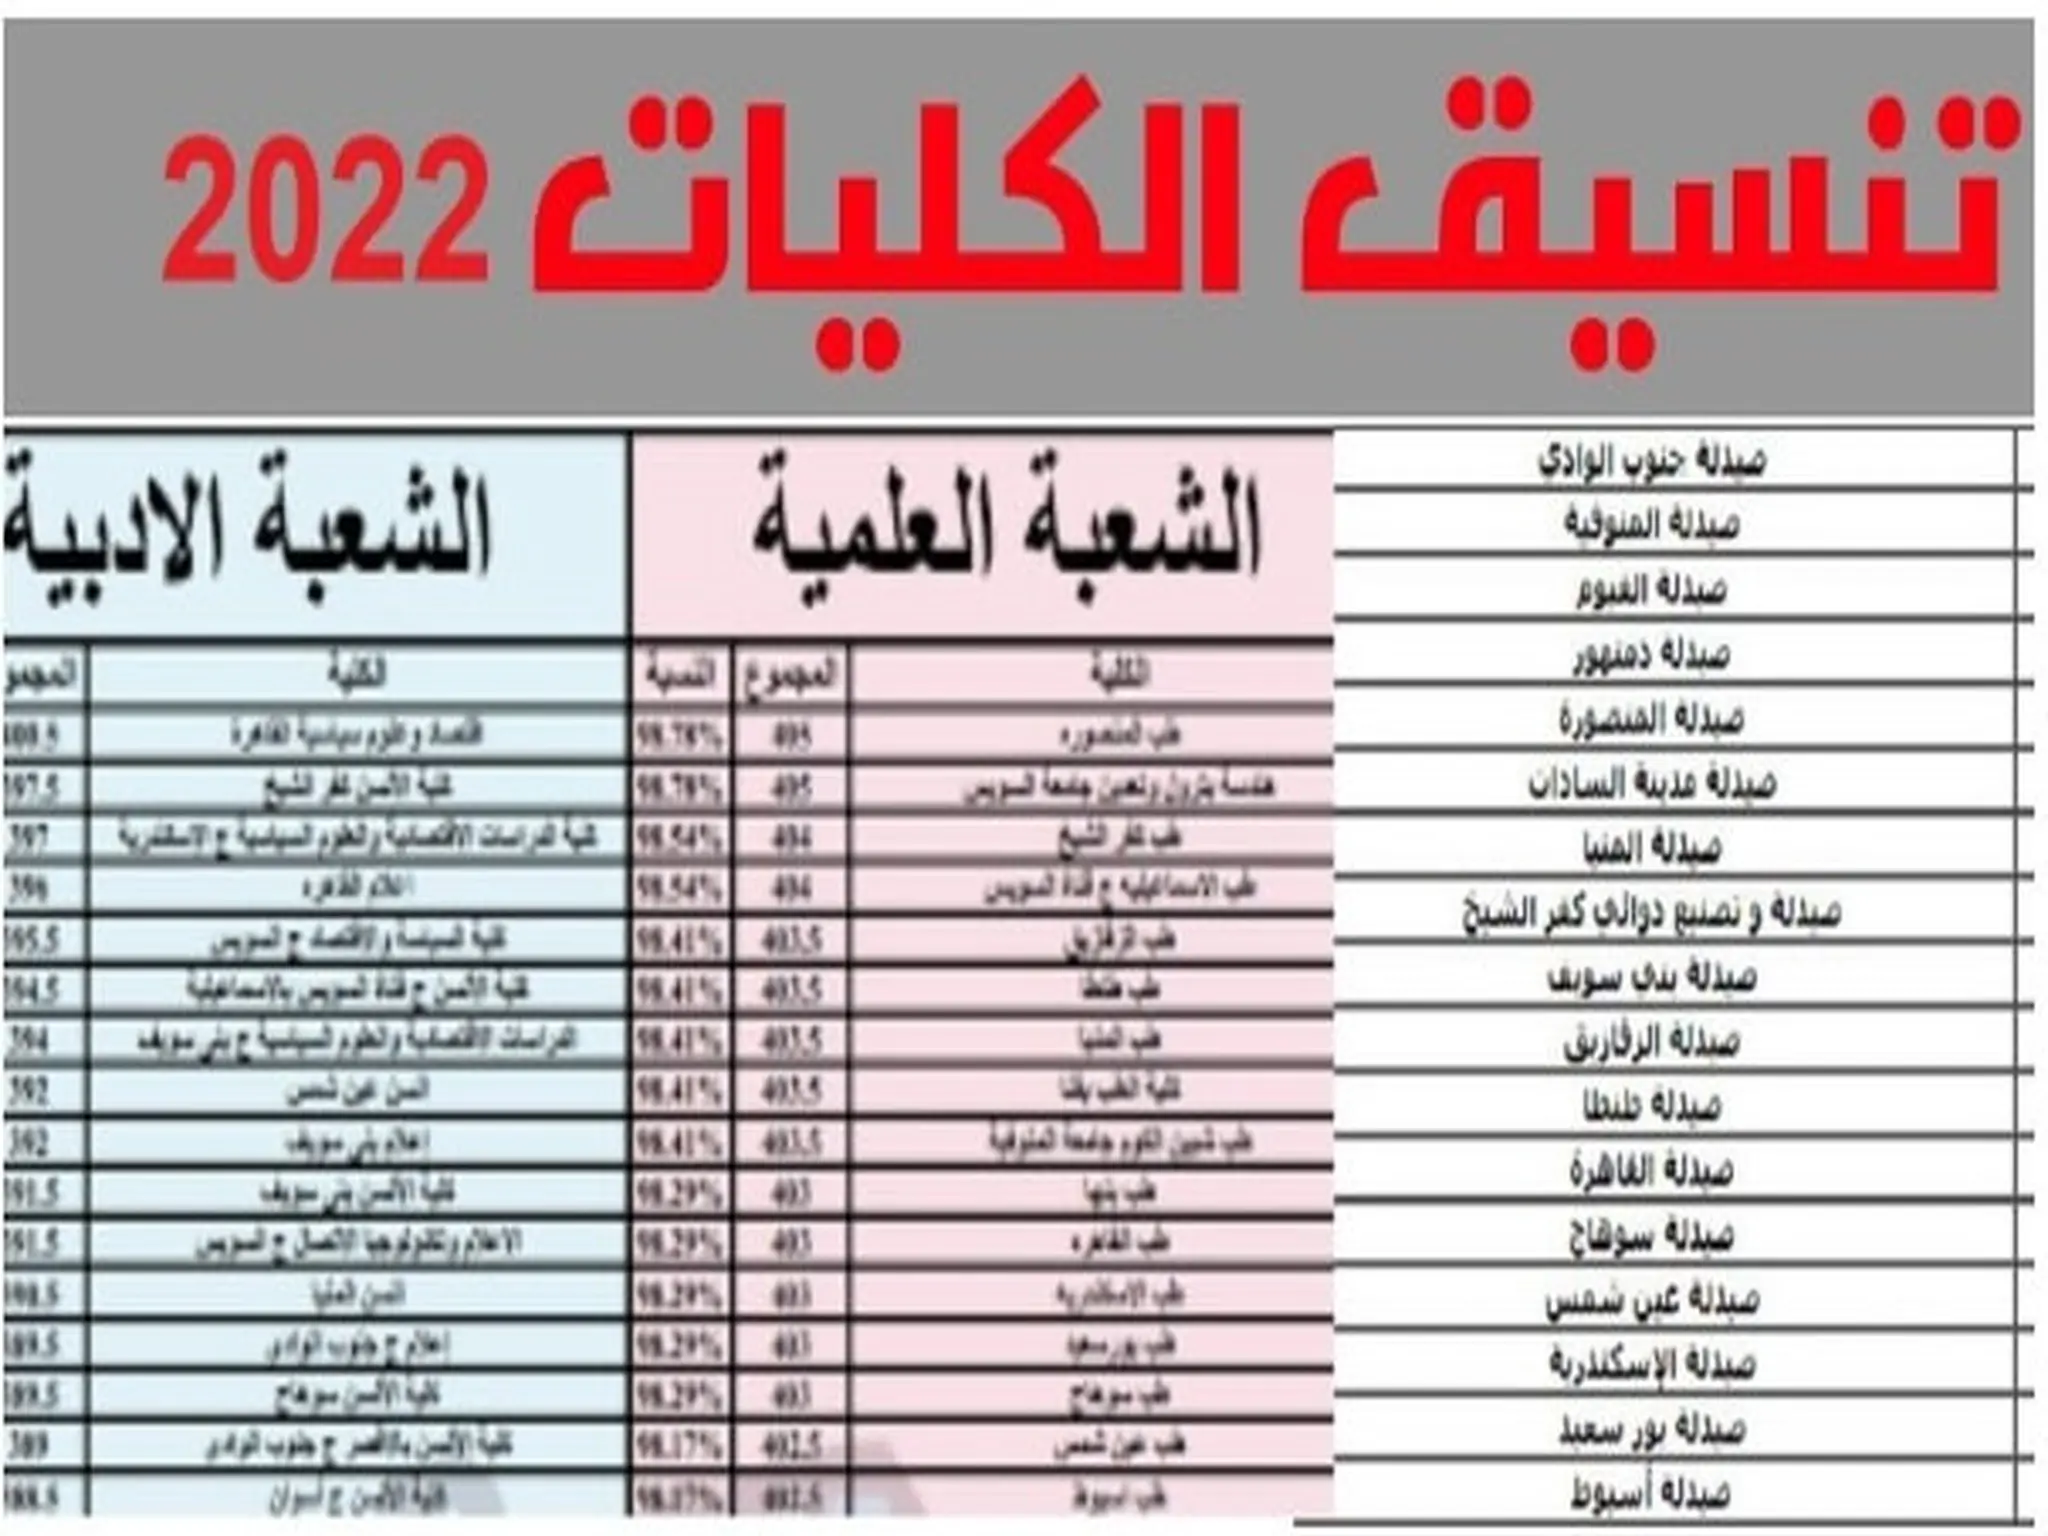 توقعات تنسيق كليه اداب 2022 مرحله ثانيه